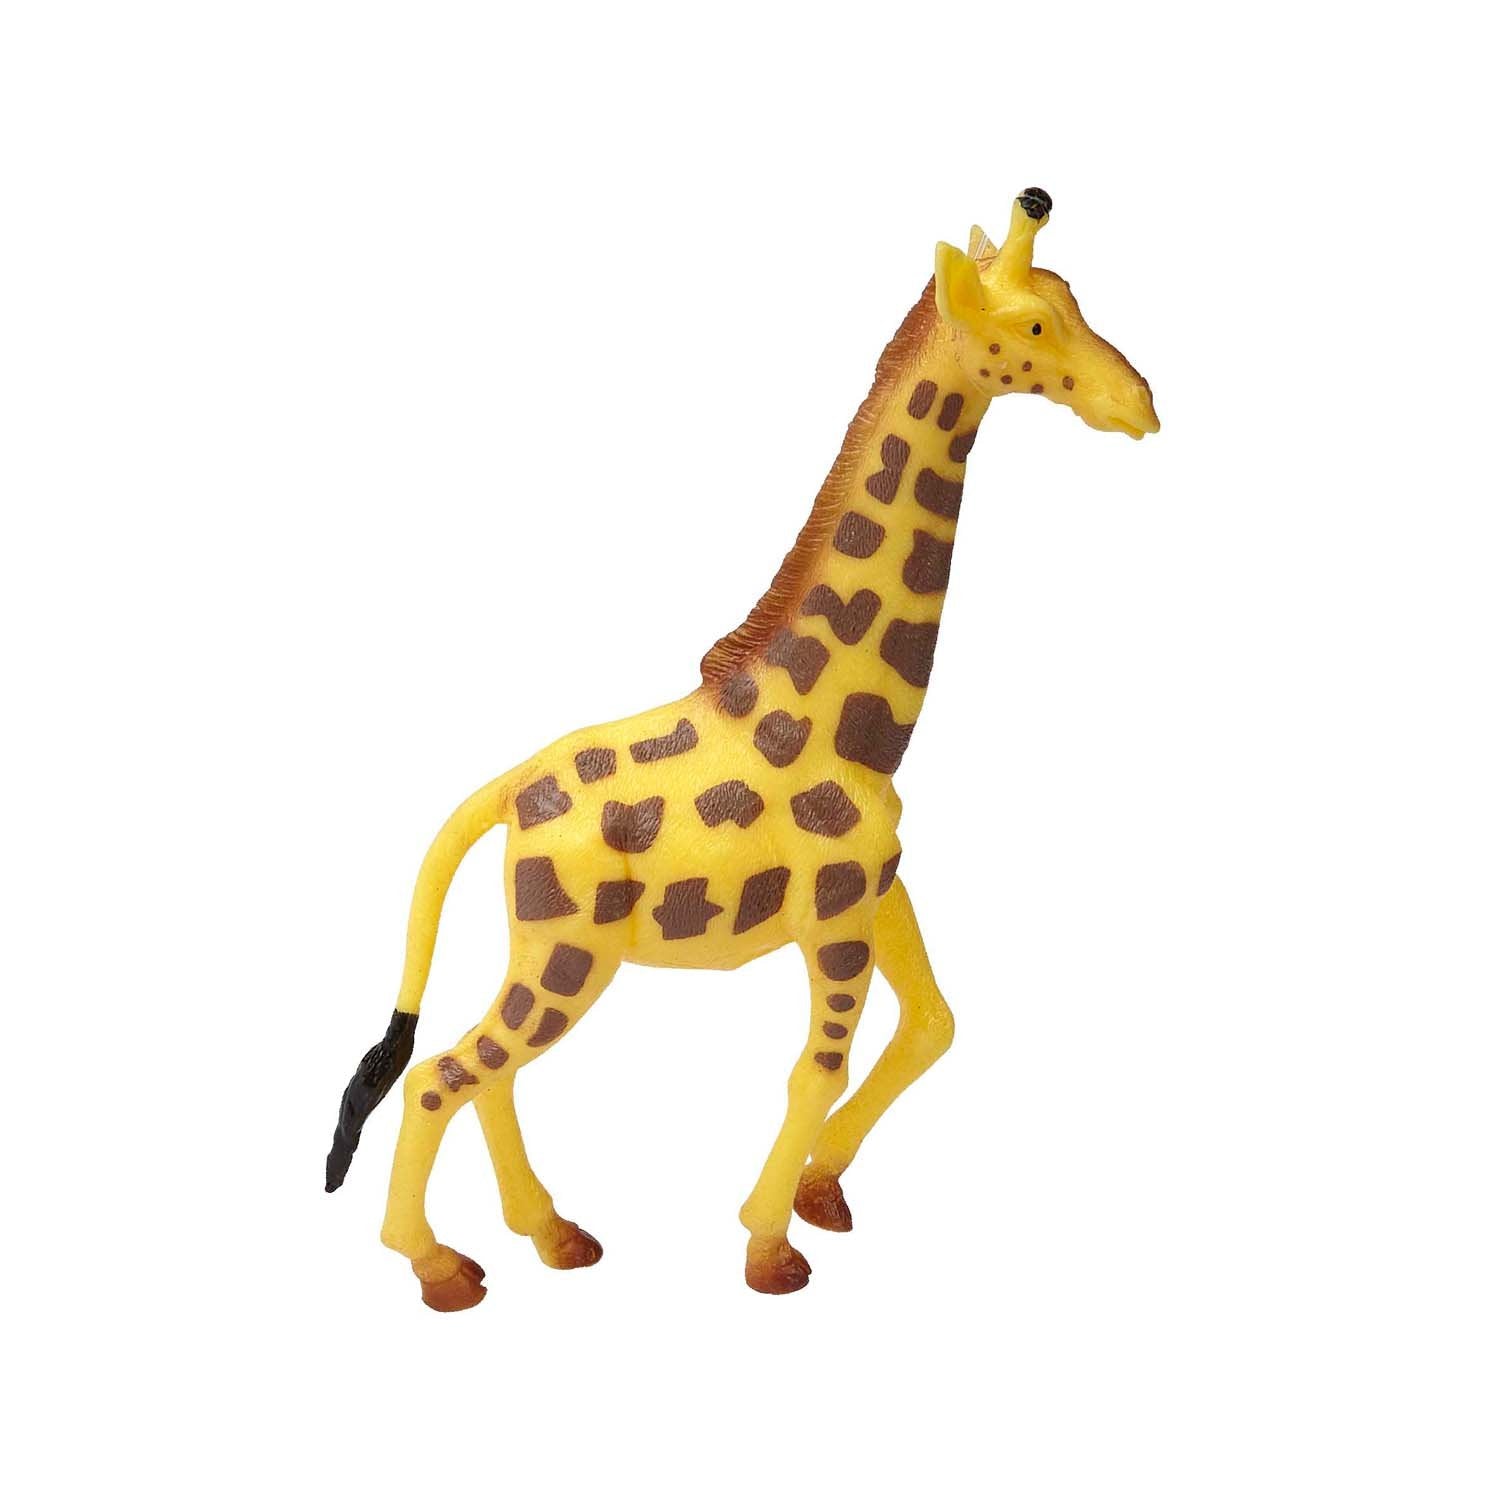 Giraffe Stretch Toy Animal Figure - Safari animal toy